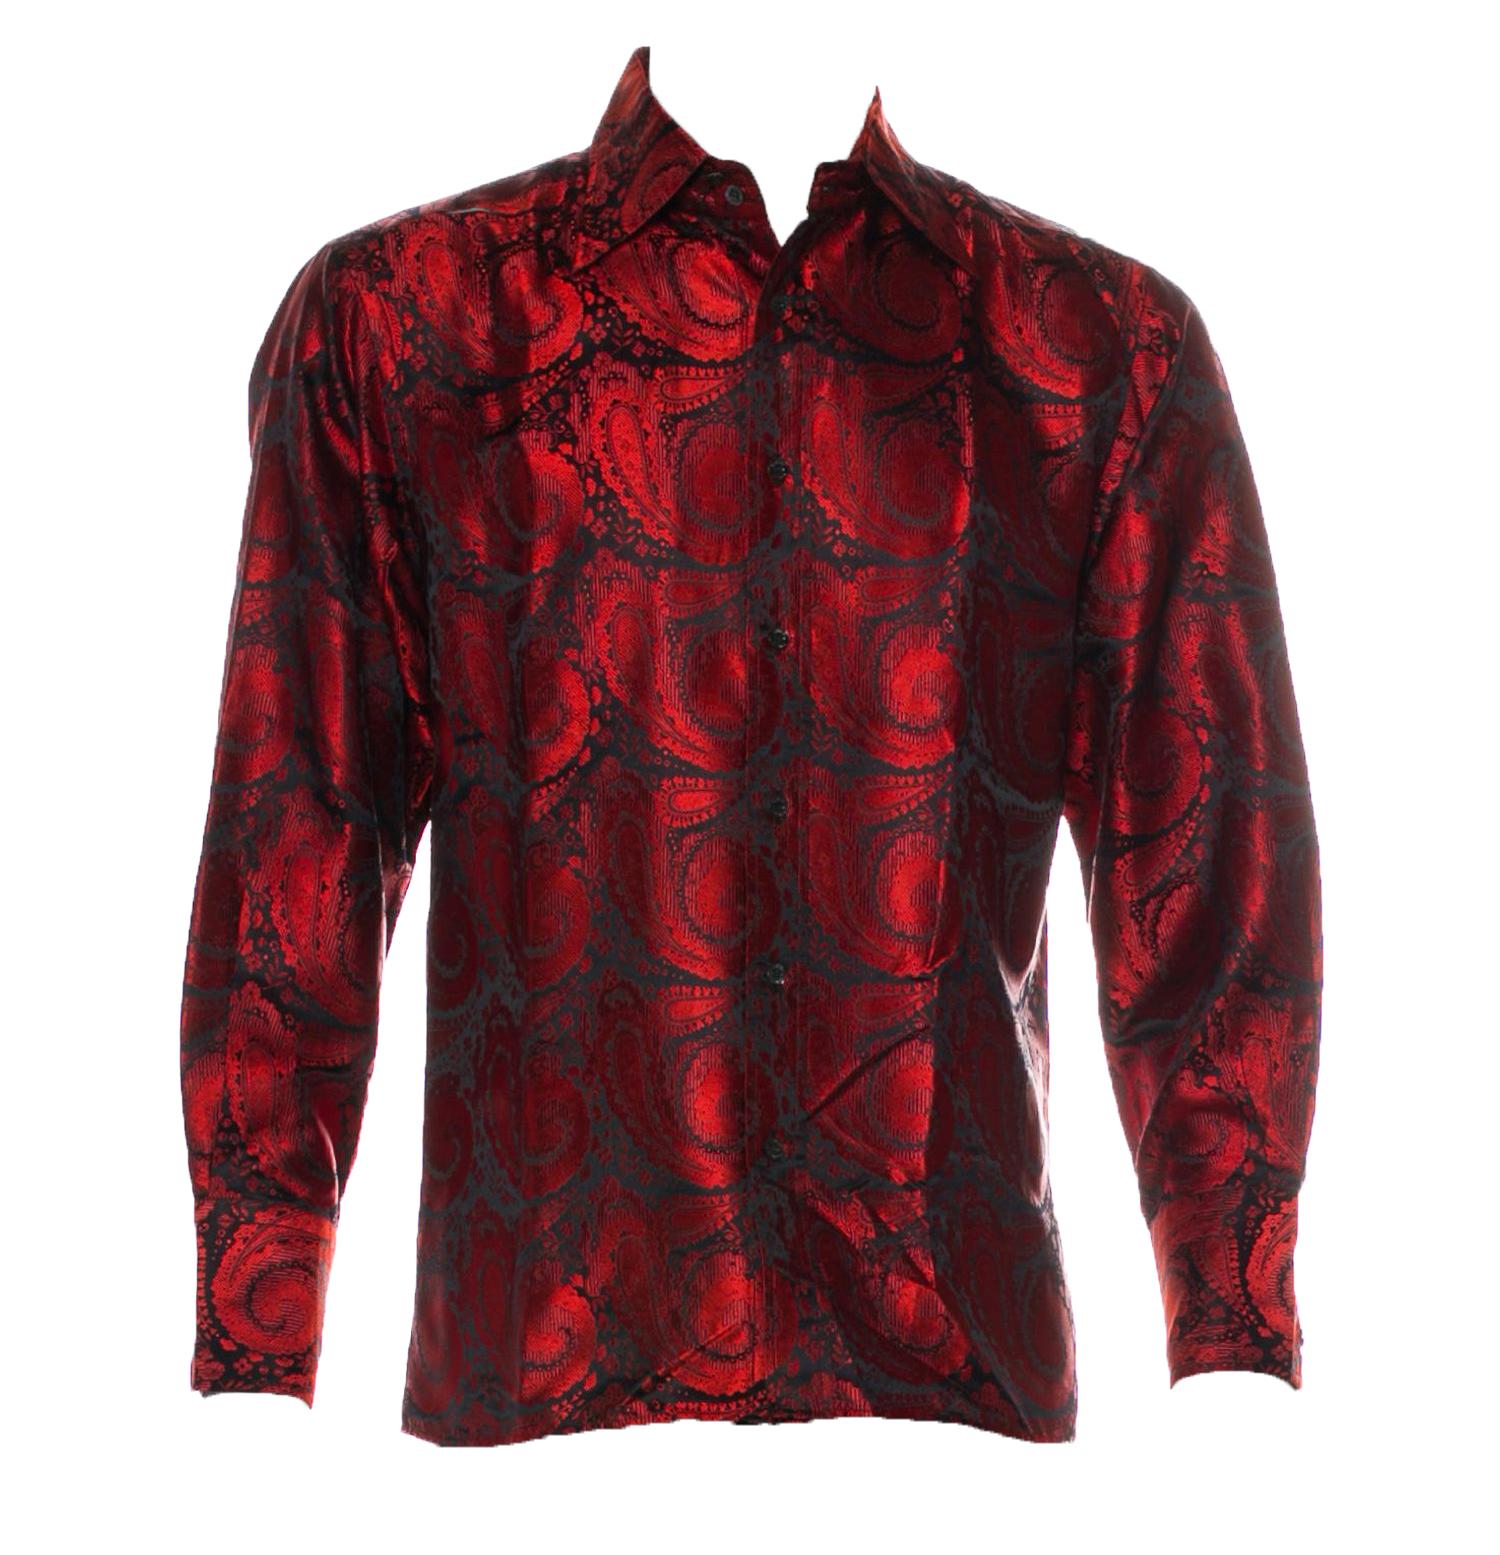 New Tom Ford for Gucci Men's Silk Diamond Red Black Paisley Design Shirt 16.5